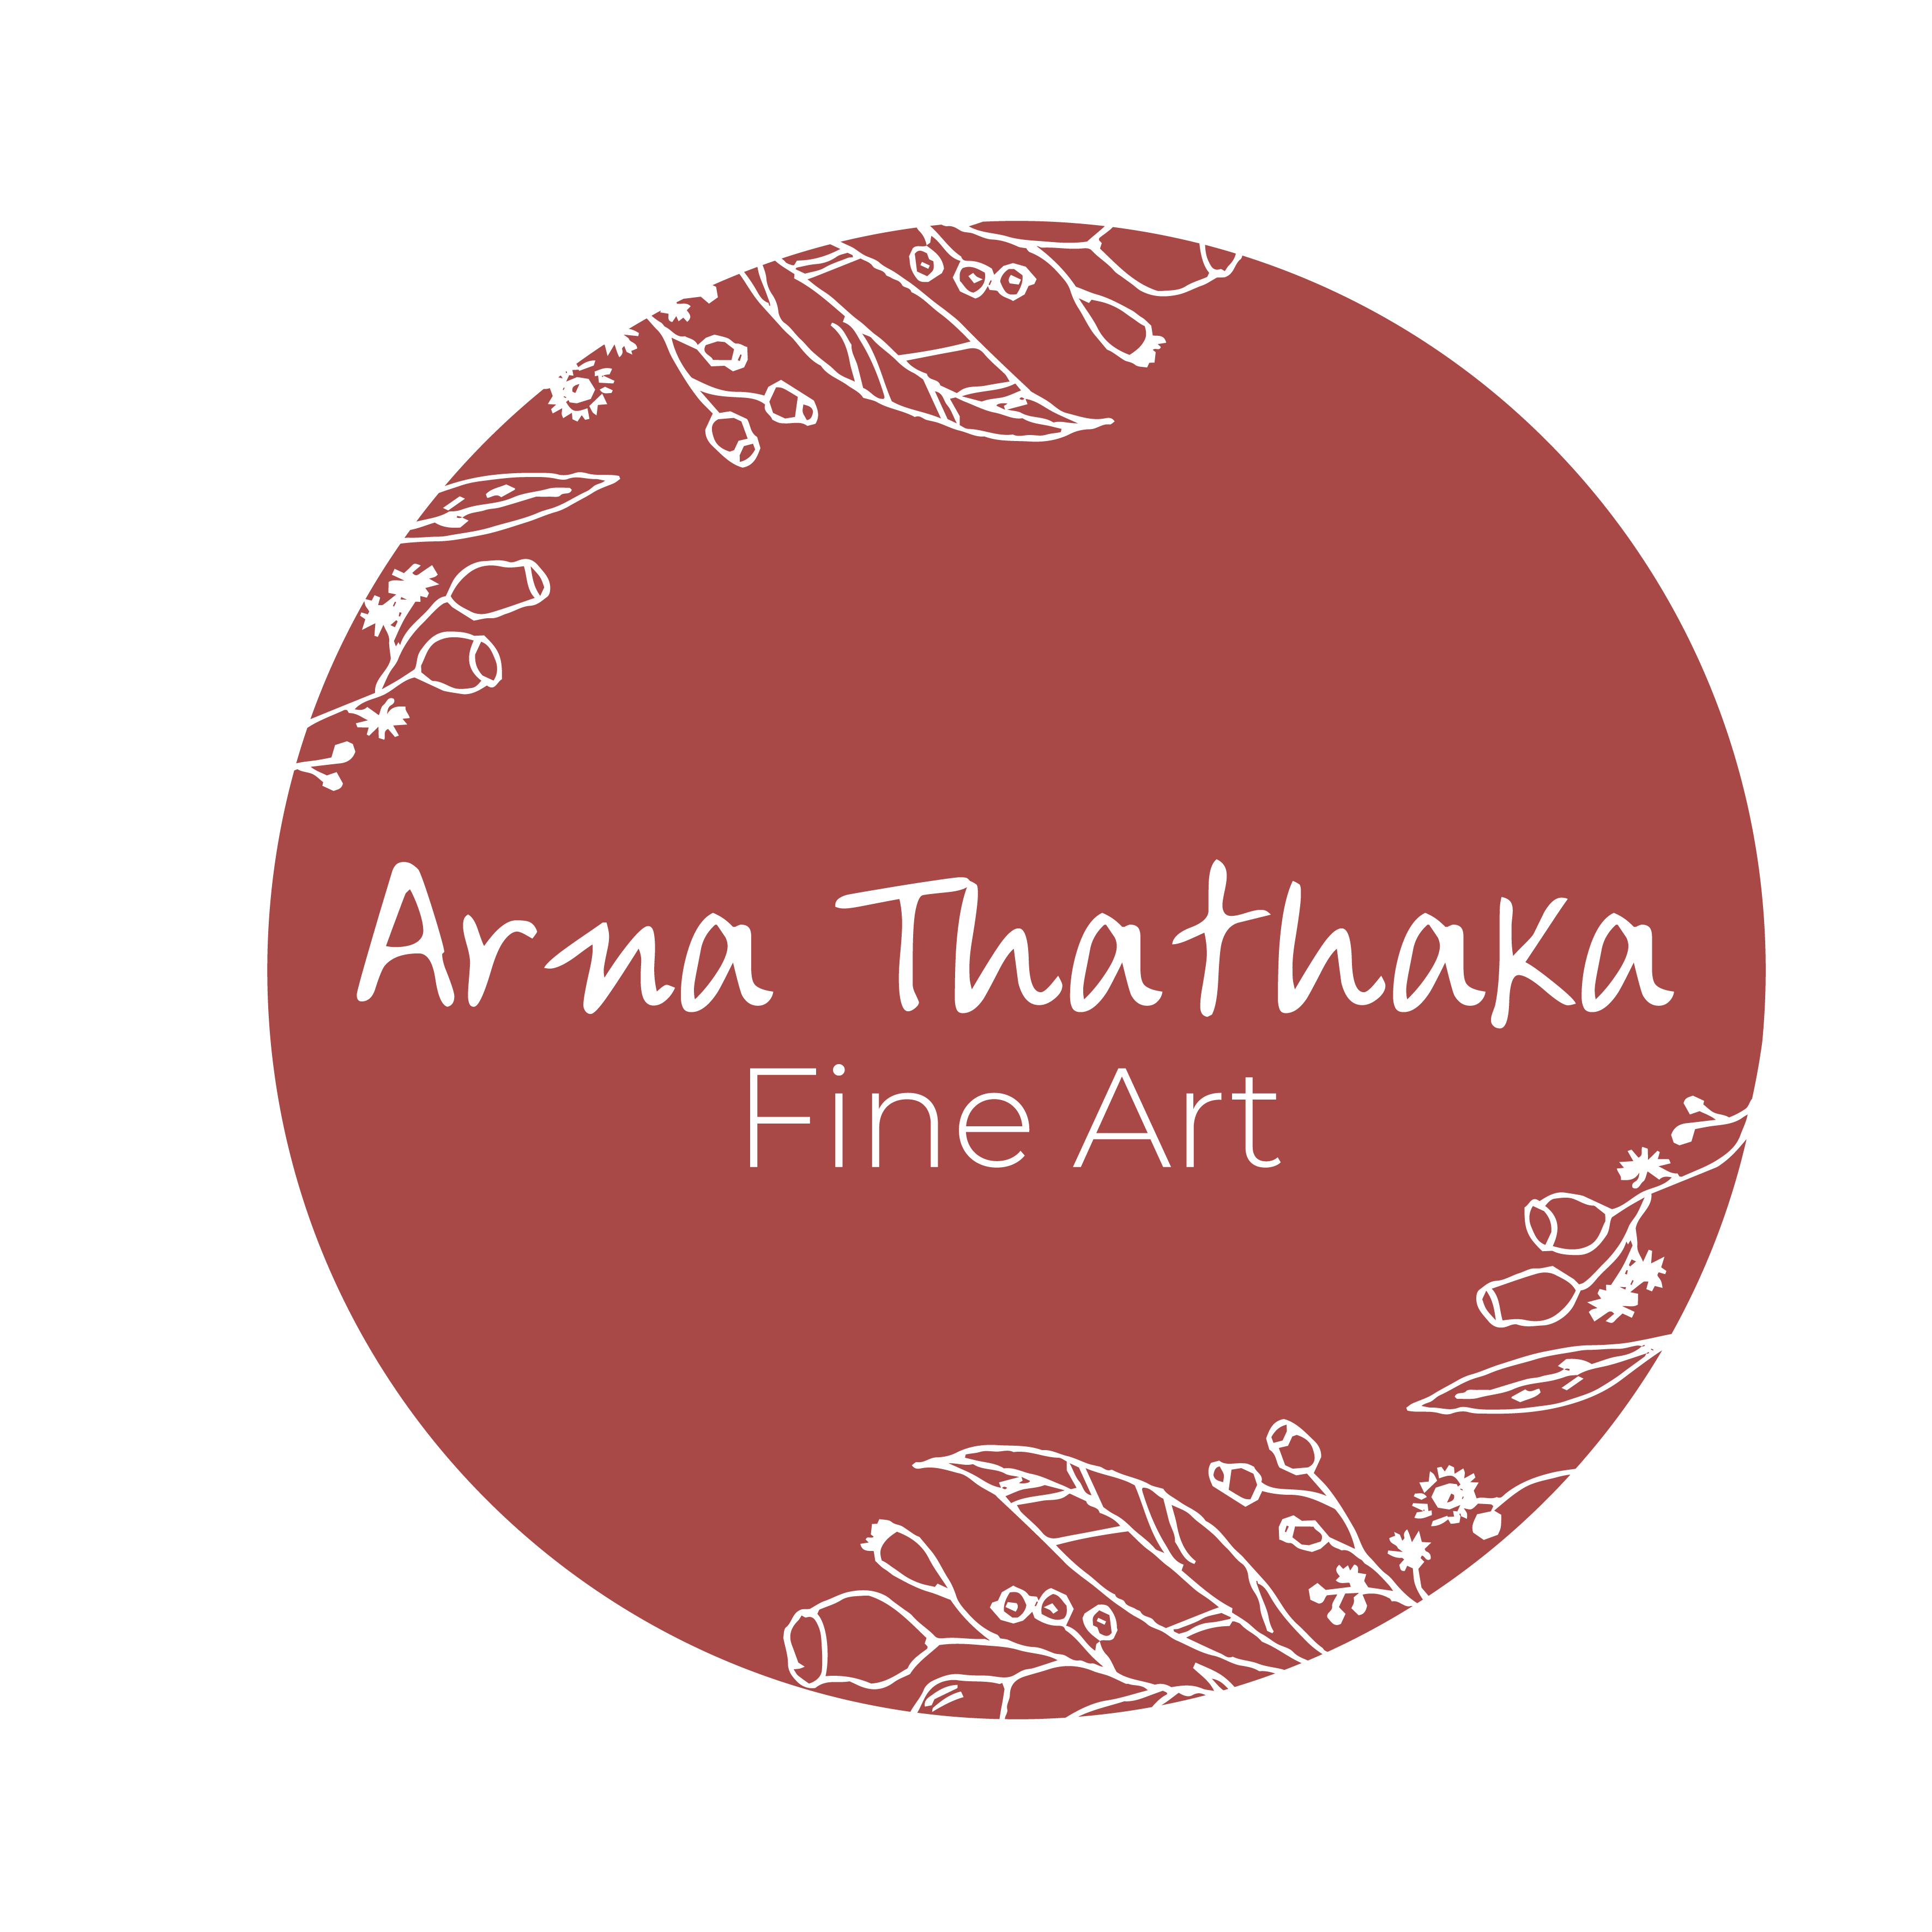 Arna Thathaka Fine Art